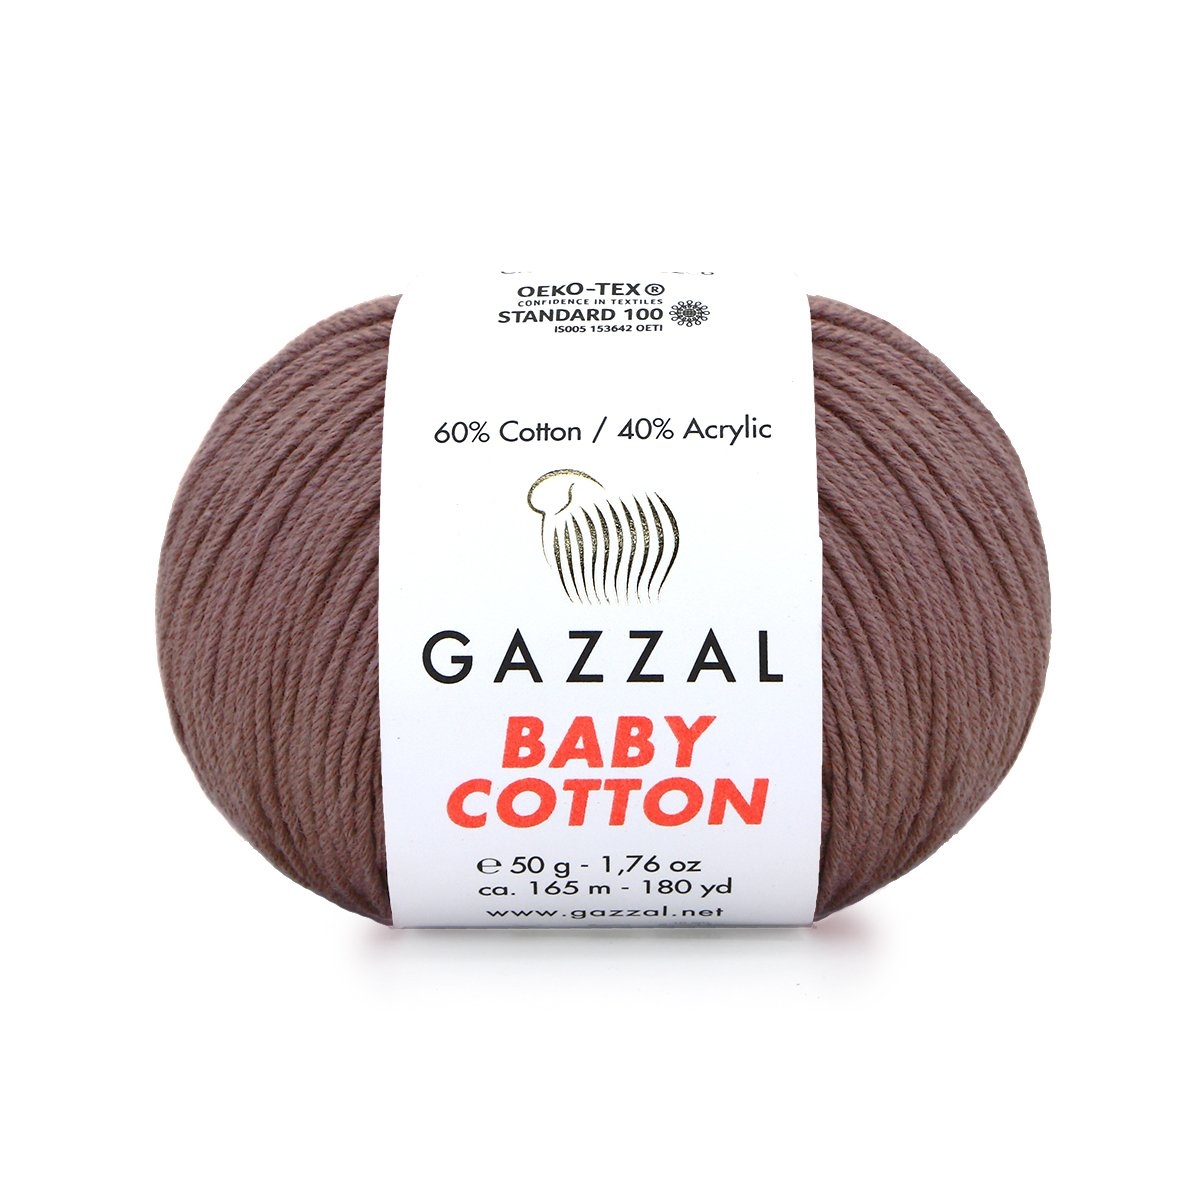 Baby Cotton 3455 - 1